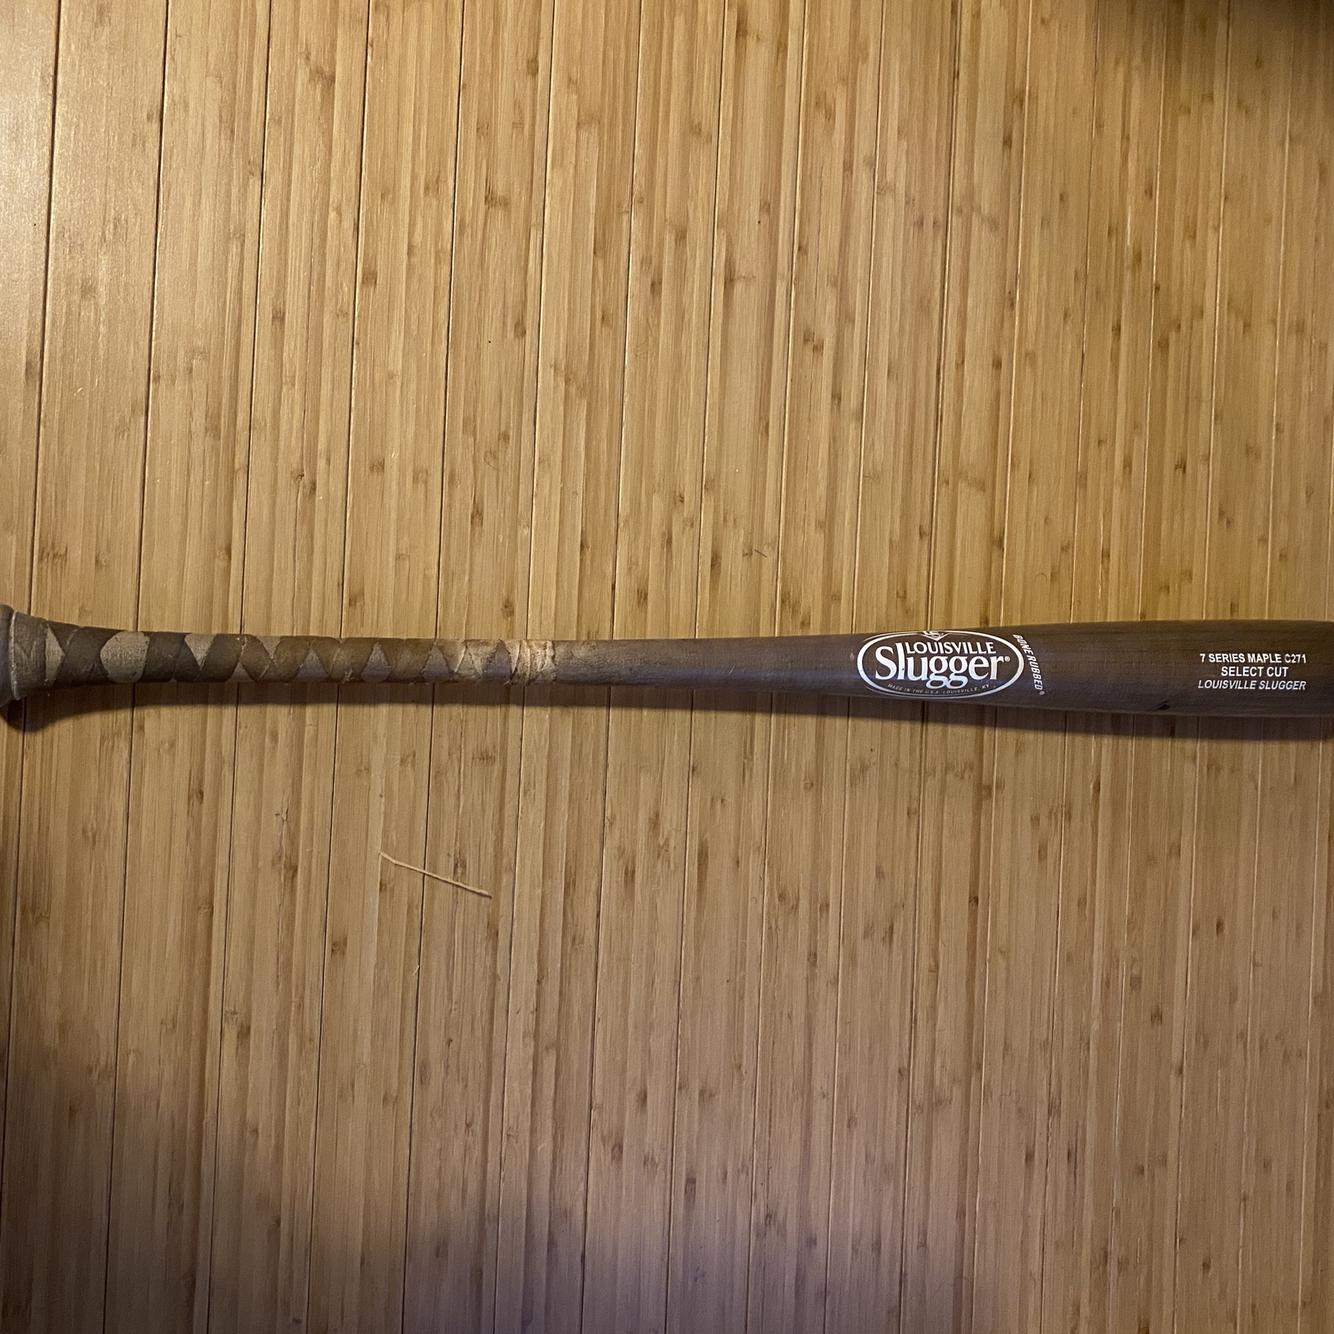 Louisville Slugger Select Cut M9 C271 Maple Baseball Bat 32 